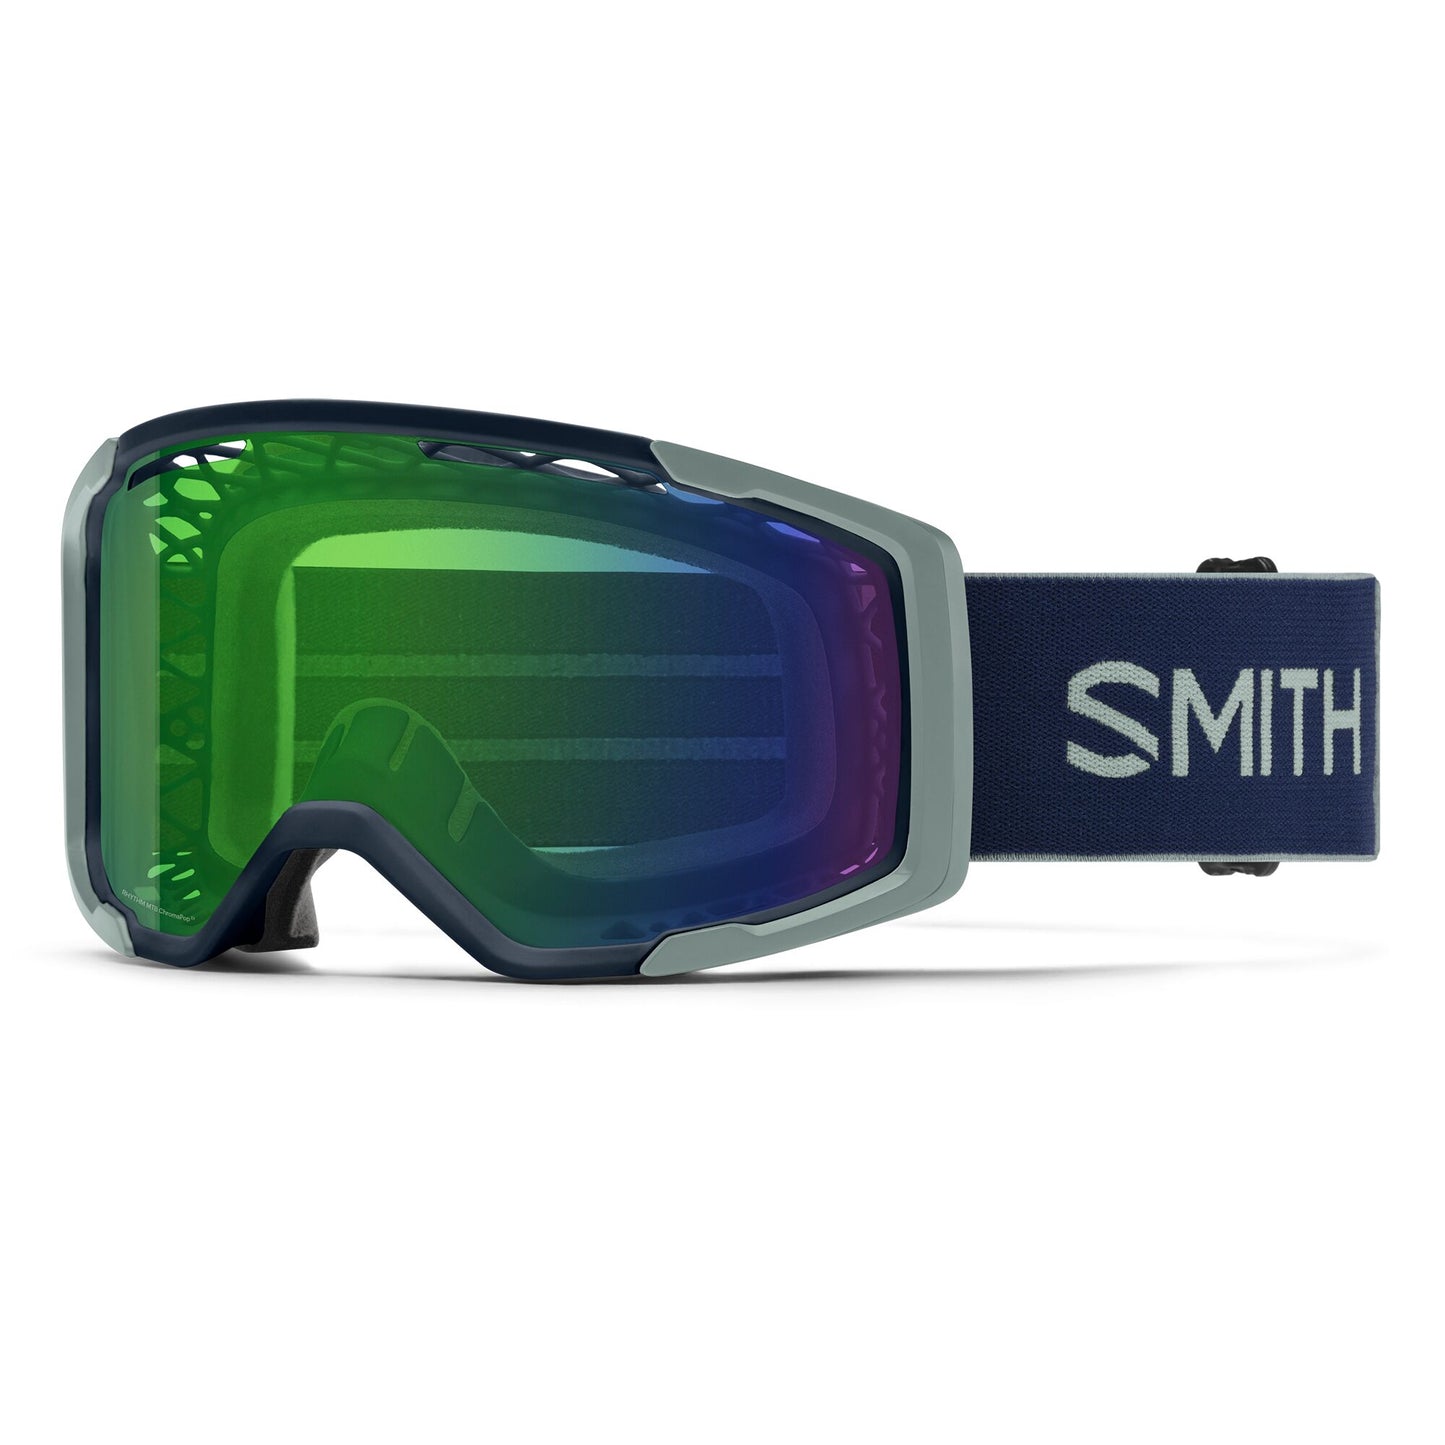 Smith Rhythm Goggles - One Size Fits Most - Midnight Navy - Sage Brush - ChromaPop Everyday Green Mirror